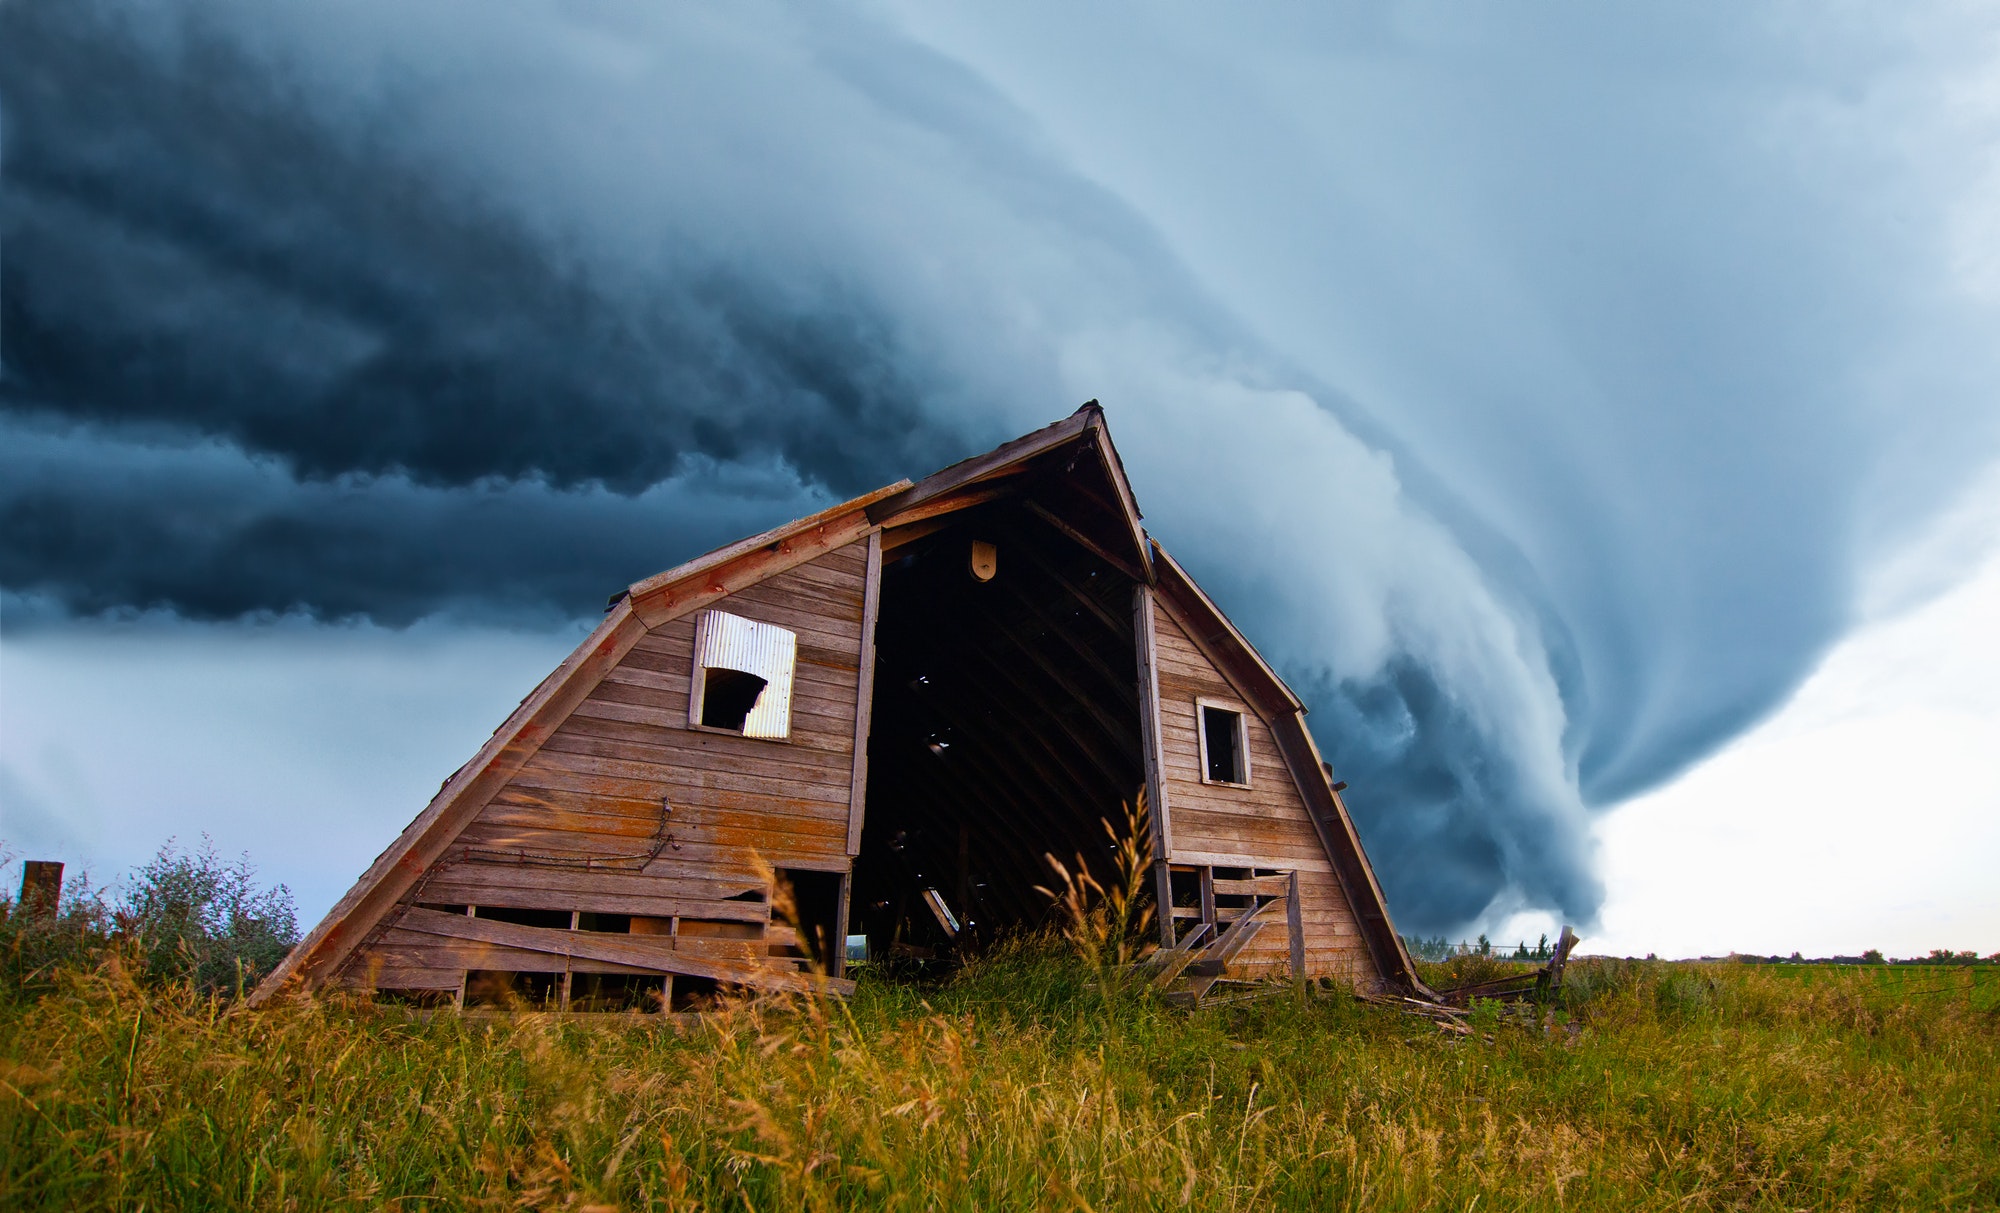 tornado forming behind old barn